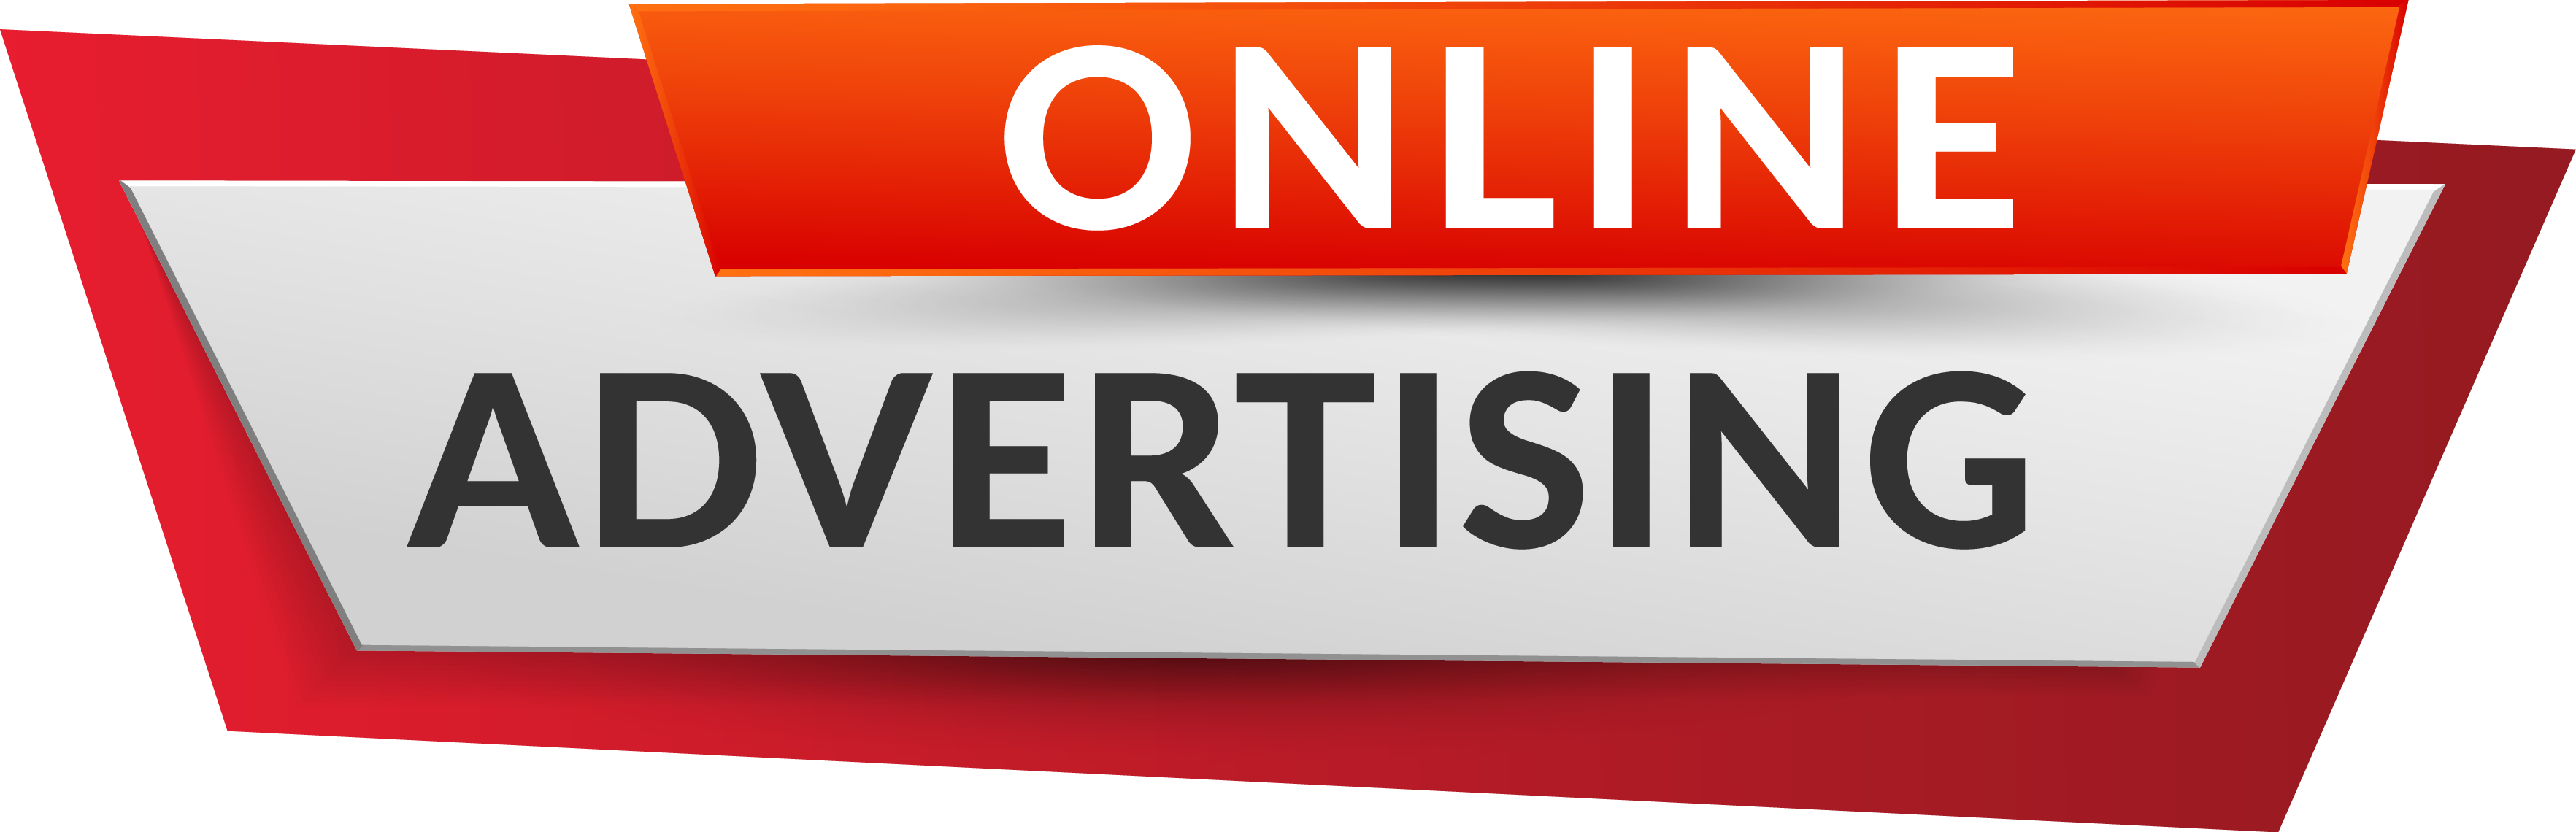 online-advertising-banner